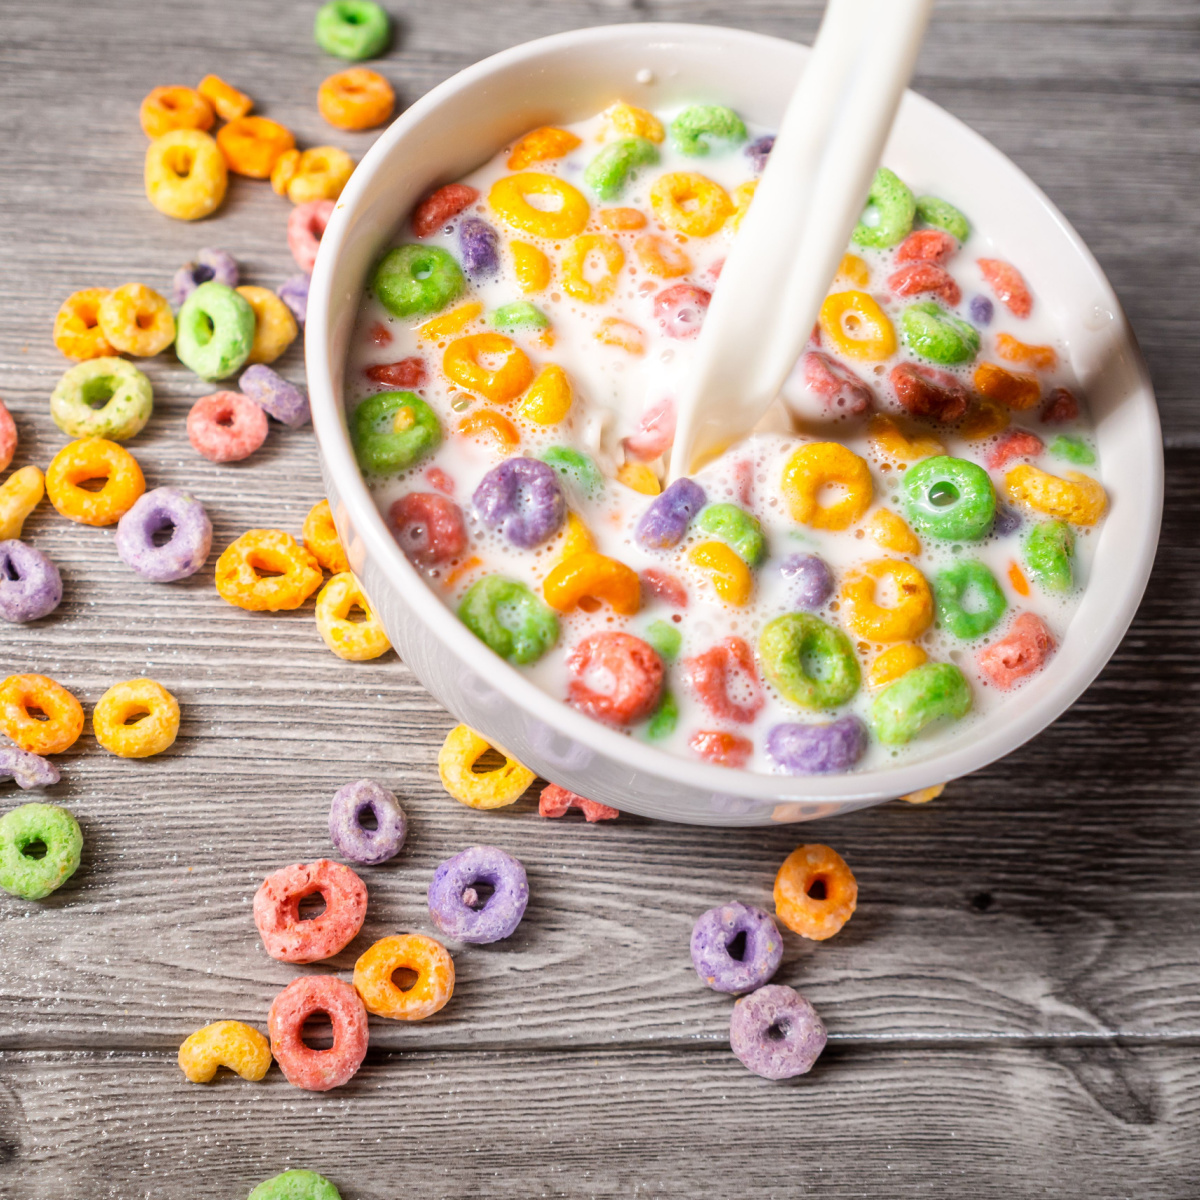 sugary cereals